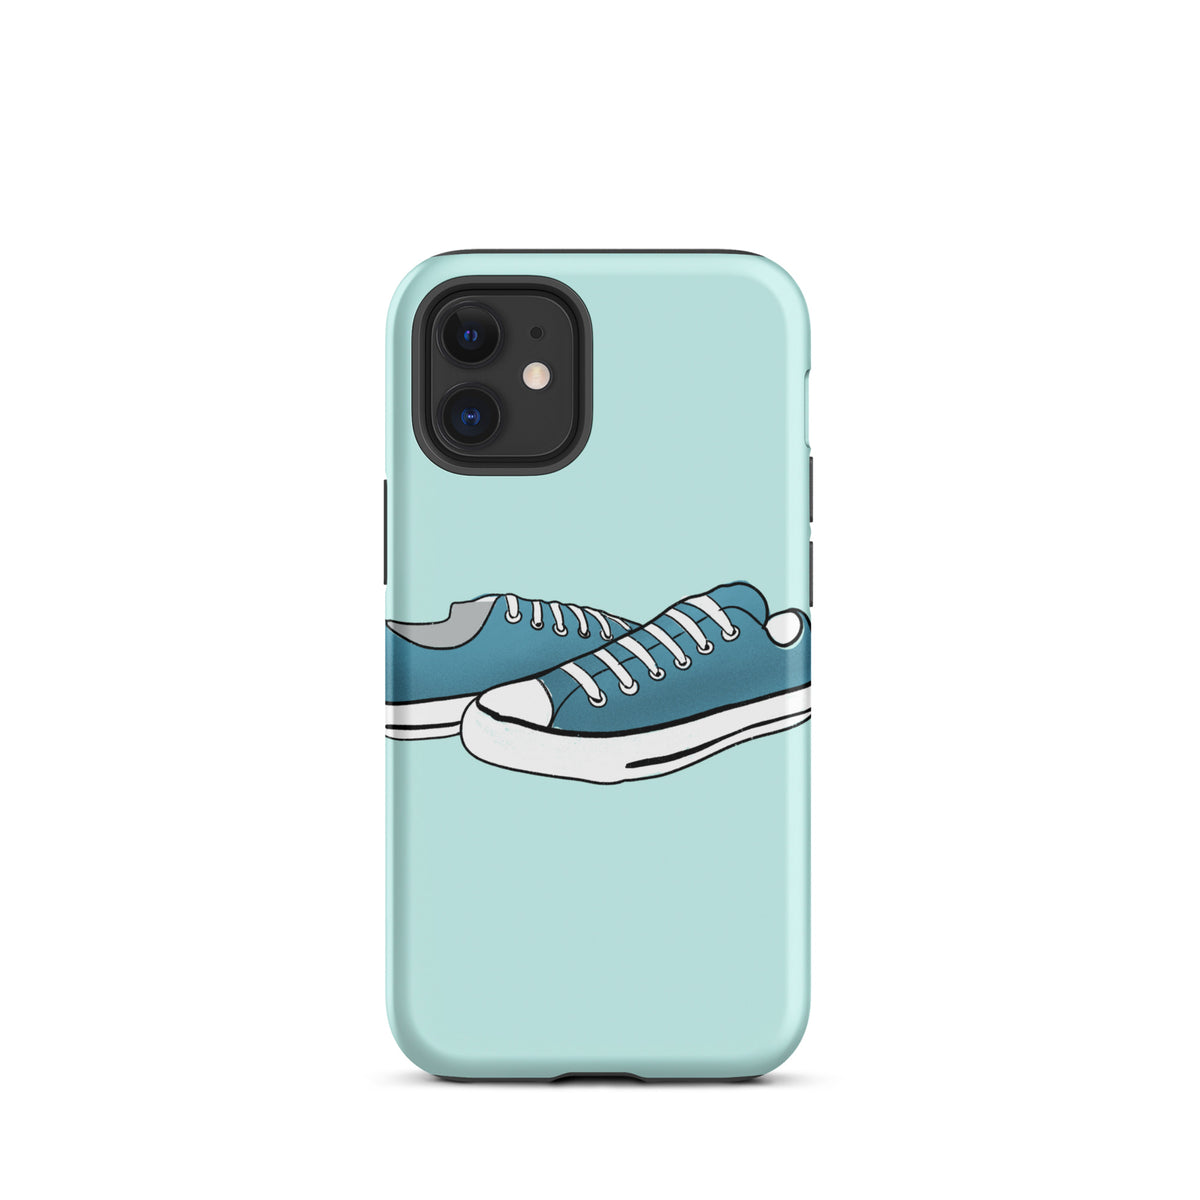 Tennis shoe iphone case